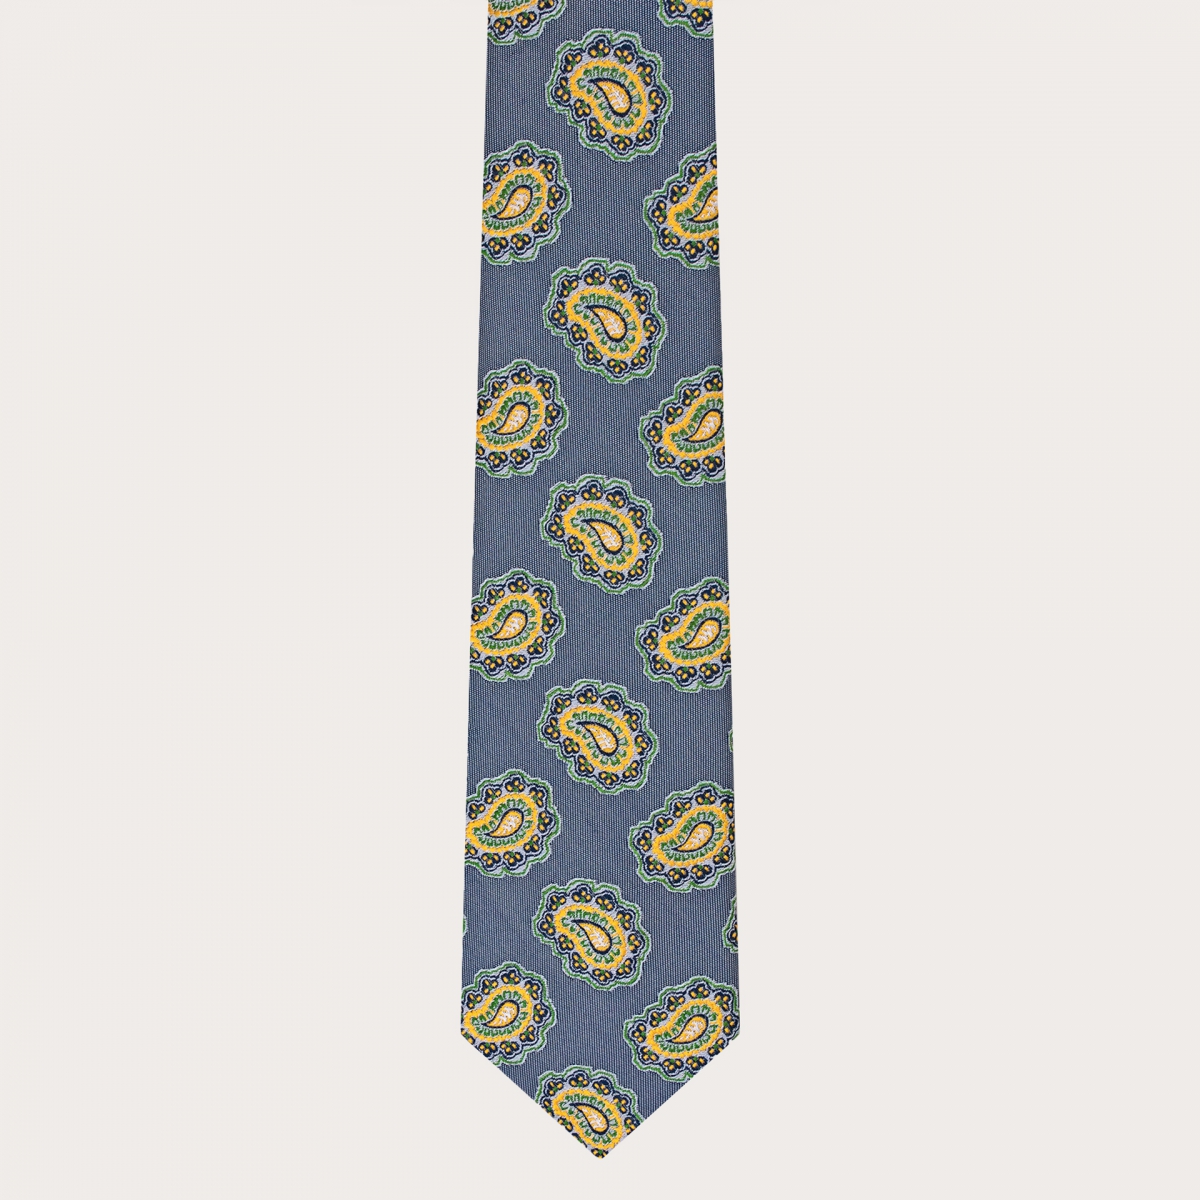 Bretelle e cravatta coordinate in seta, fantasia paisley tortora